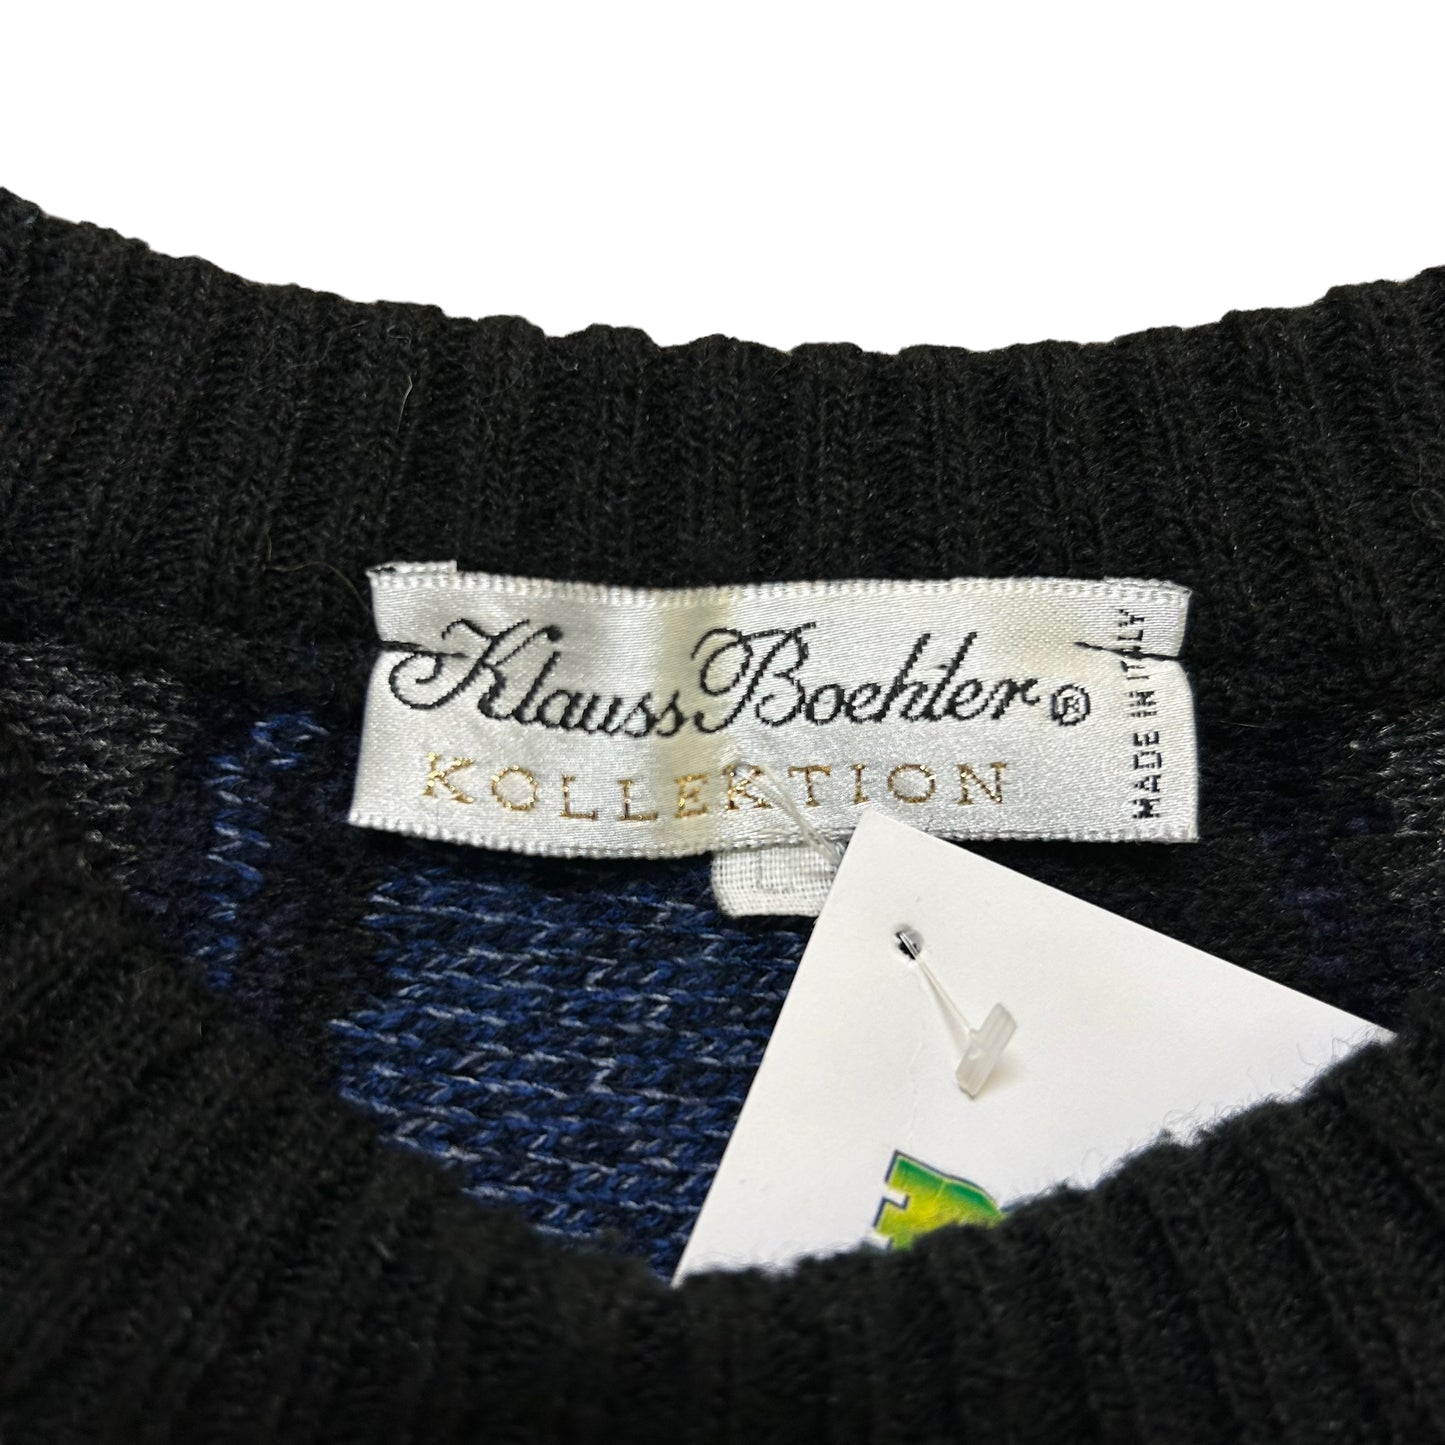 Vintage 1990s Klauss Boehler Black/Blue/Grey Italian Made Knit Sweater- Size Large